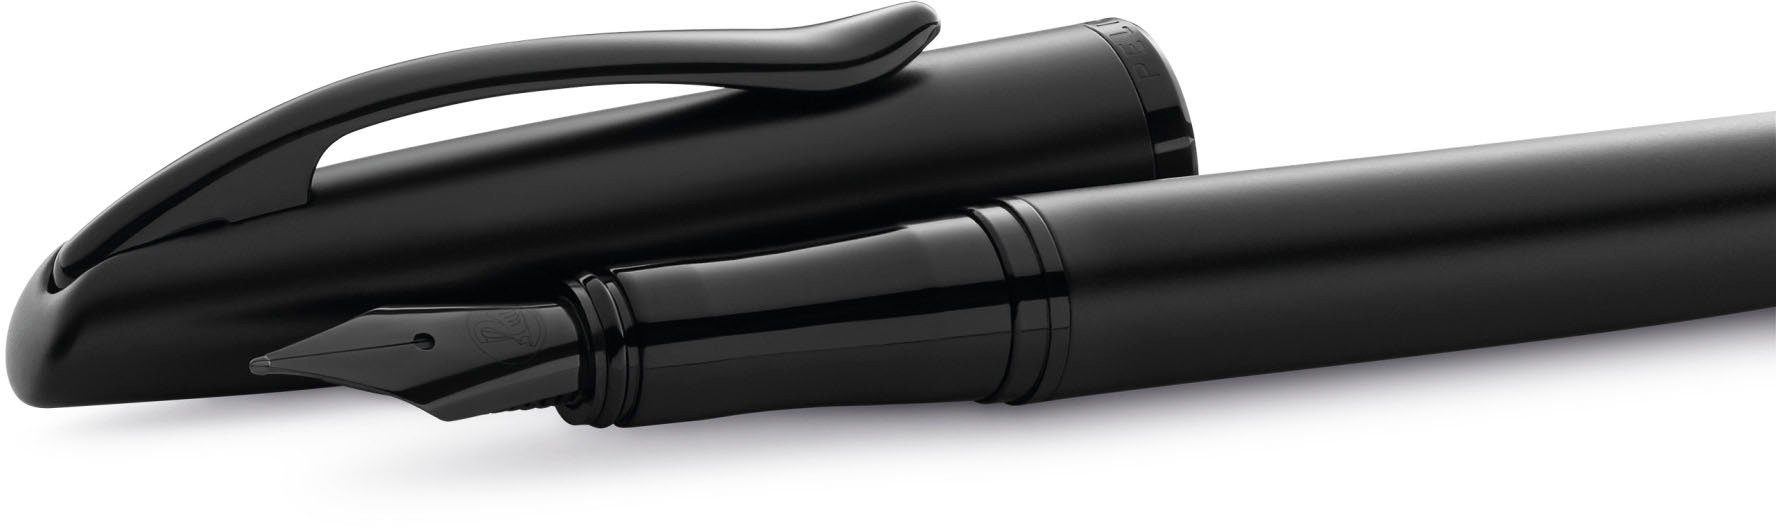 Jazz® carbon Füllhalter Pelikan mit Elegance, Noble Kugelschreiber schwarz, (Set),